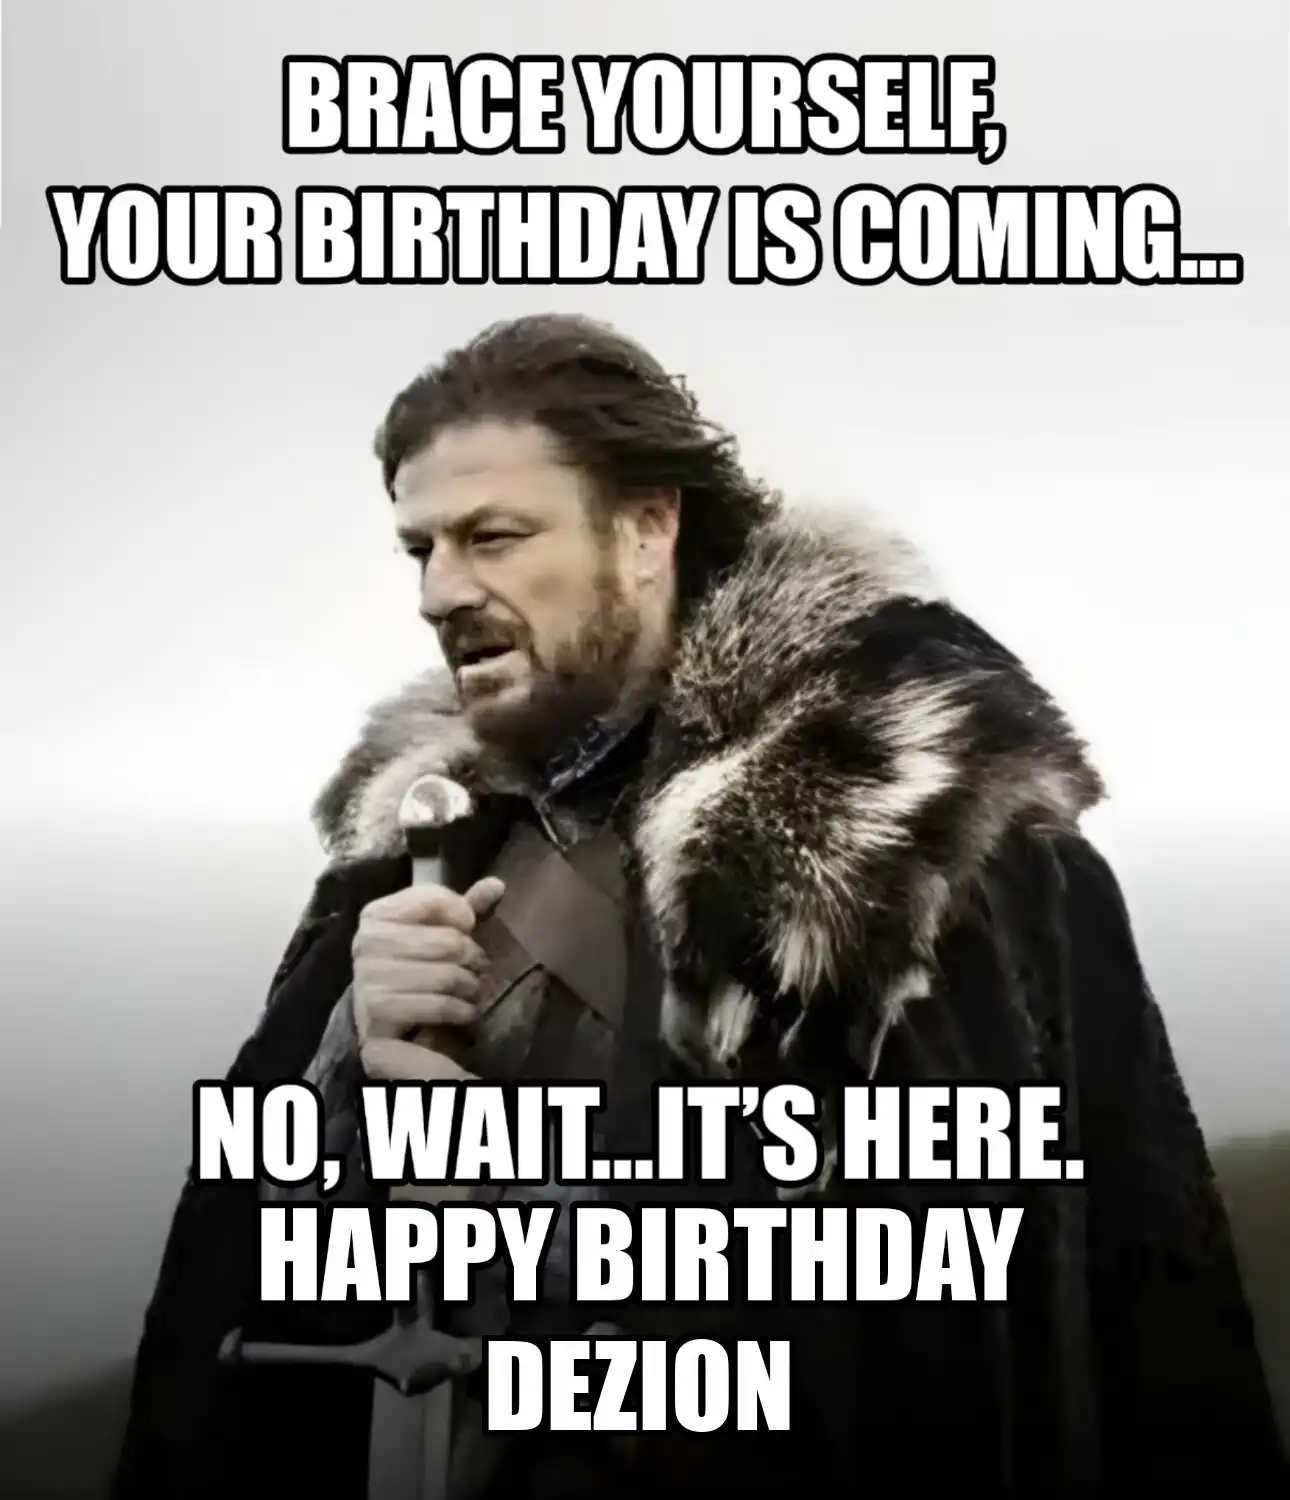 Happy Birthday Dezion Brace Yourself Your Birthday Is Coming Meme